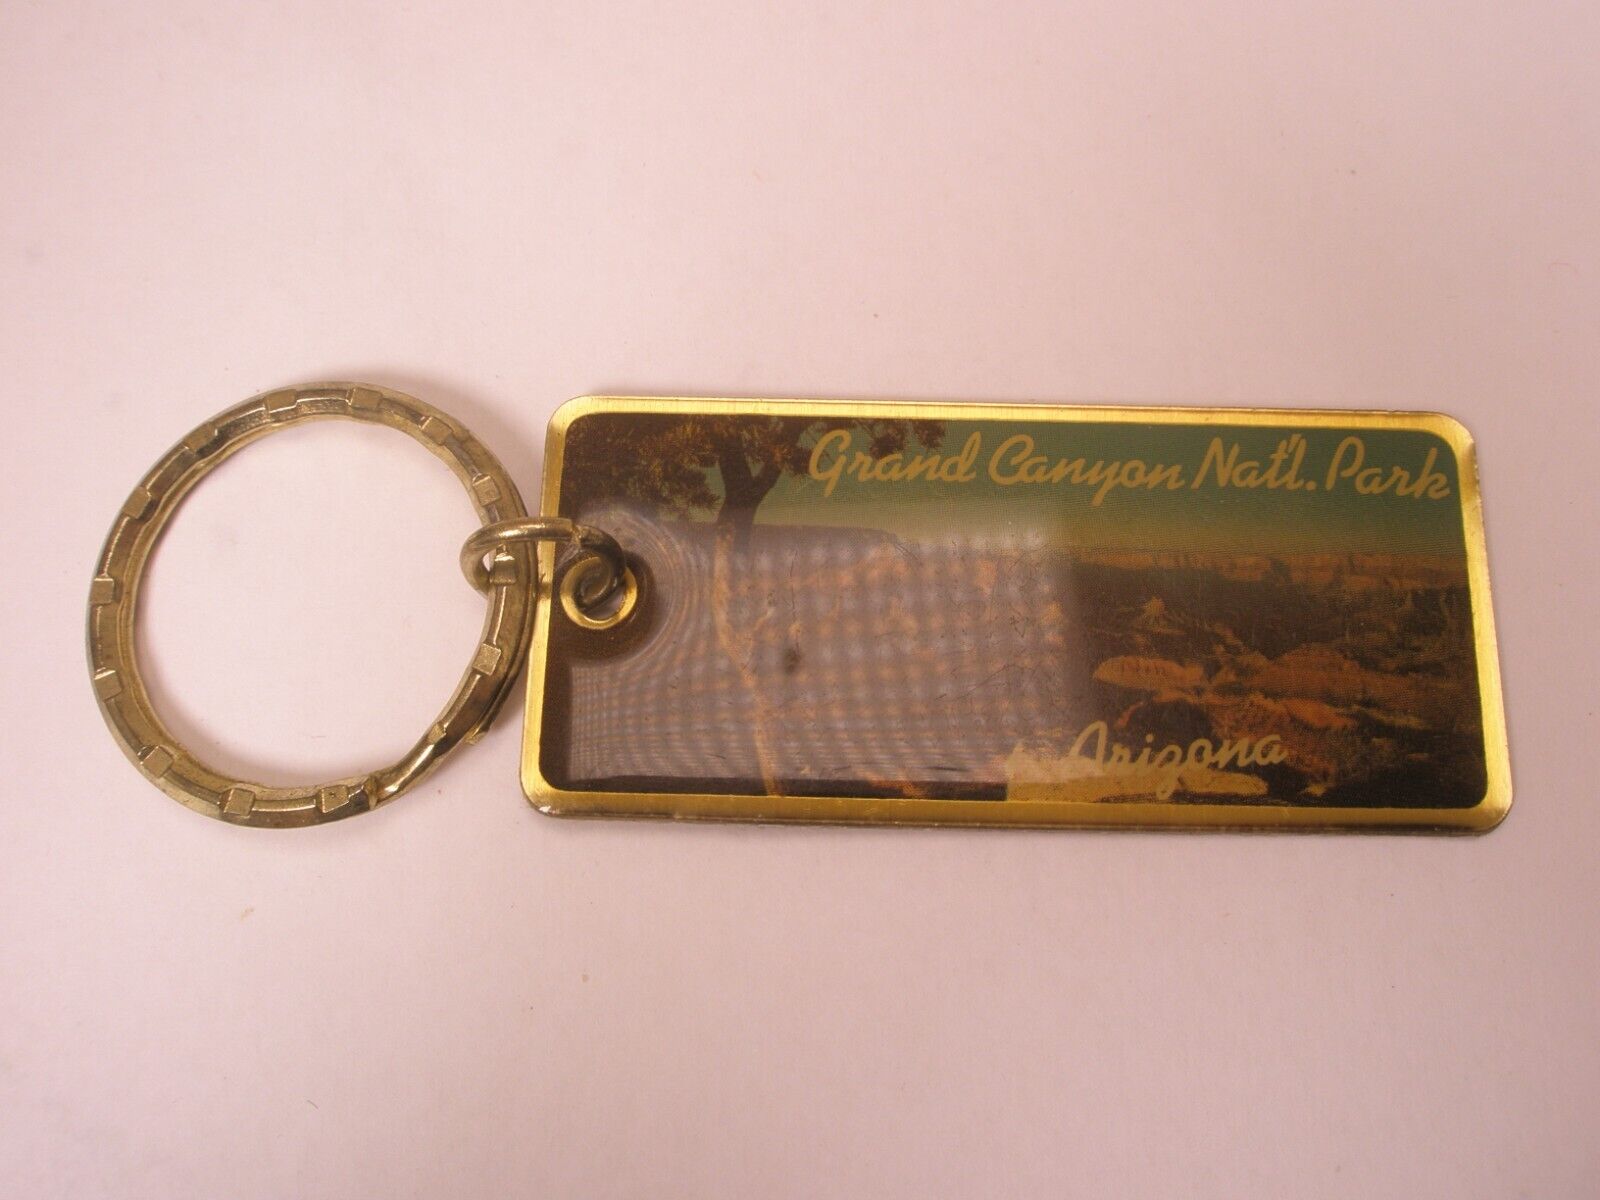 Grand Canyon National Park Arizona Travel Souvenir Vintage Key Chain